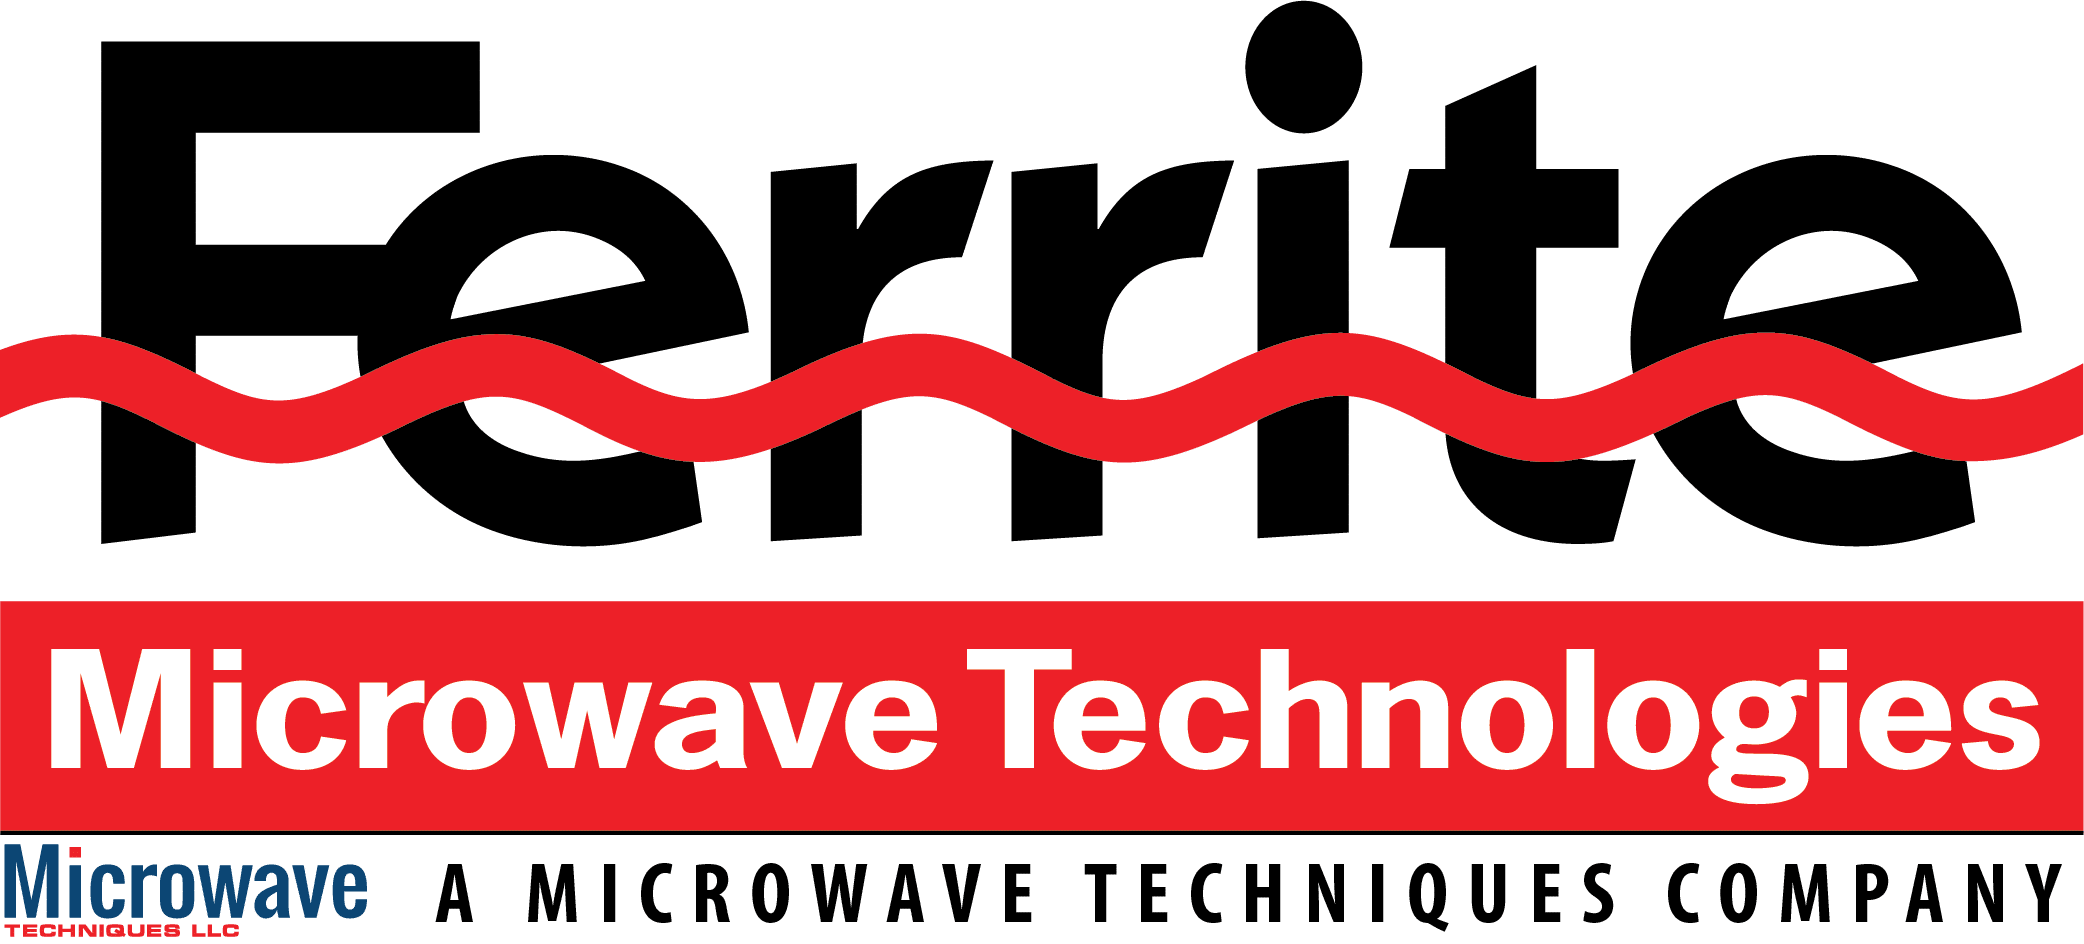 Ferrite Microwave Technologies Logo